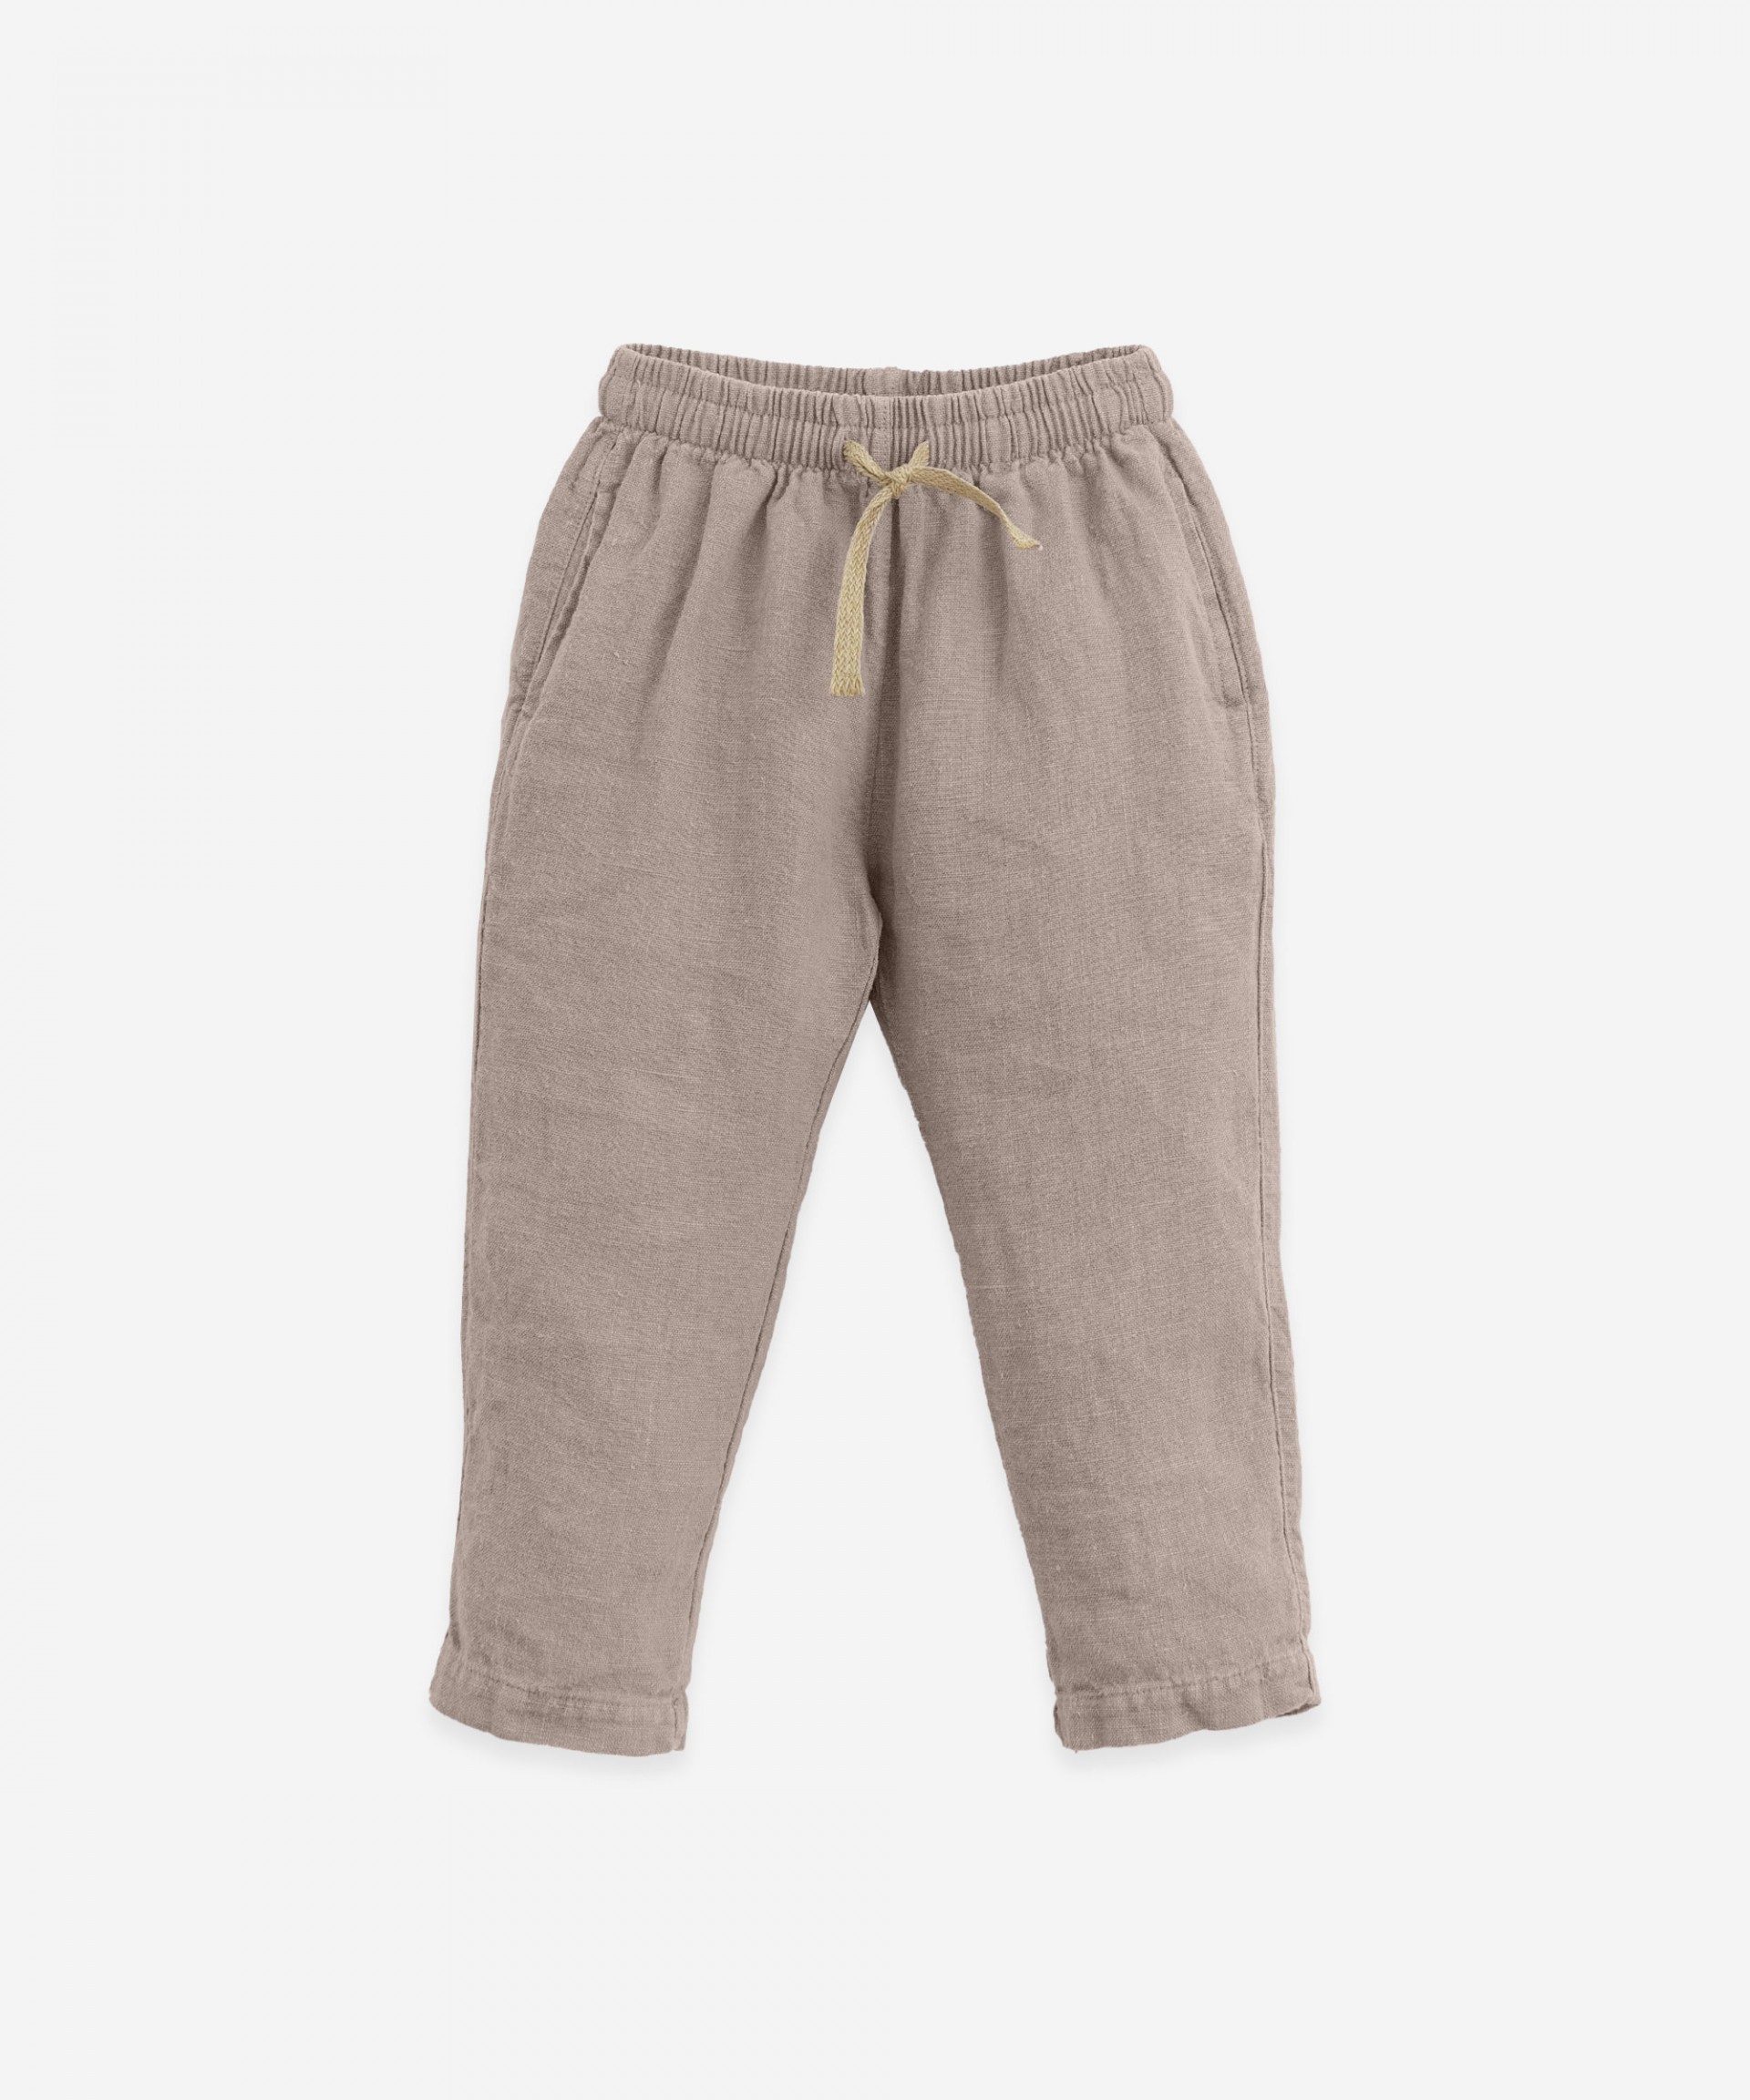 The Simple Folk  Childrens Linen Pants  Organic Linen Trousers   Natures Wild Child